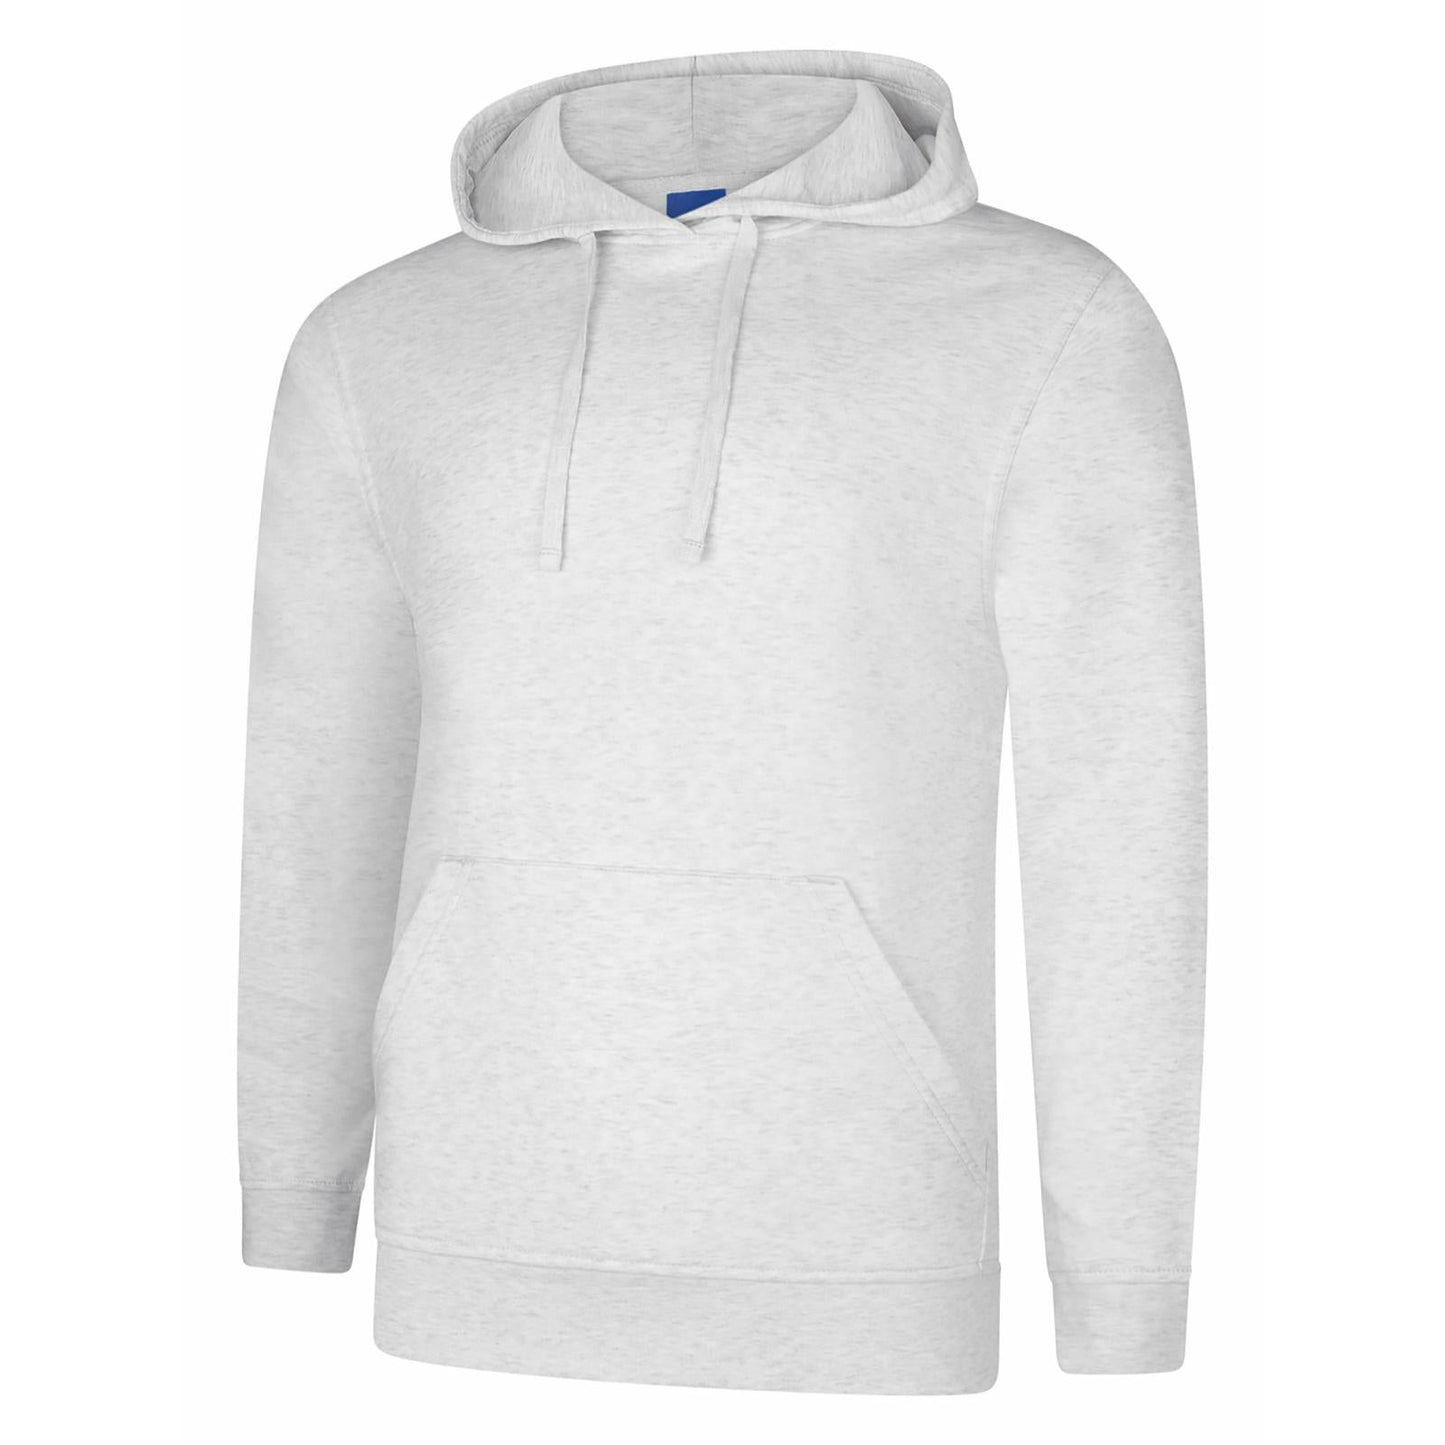 Deluxe Hooded Sweatshirt (XS - M) Ash Grey